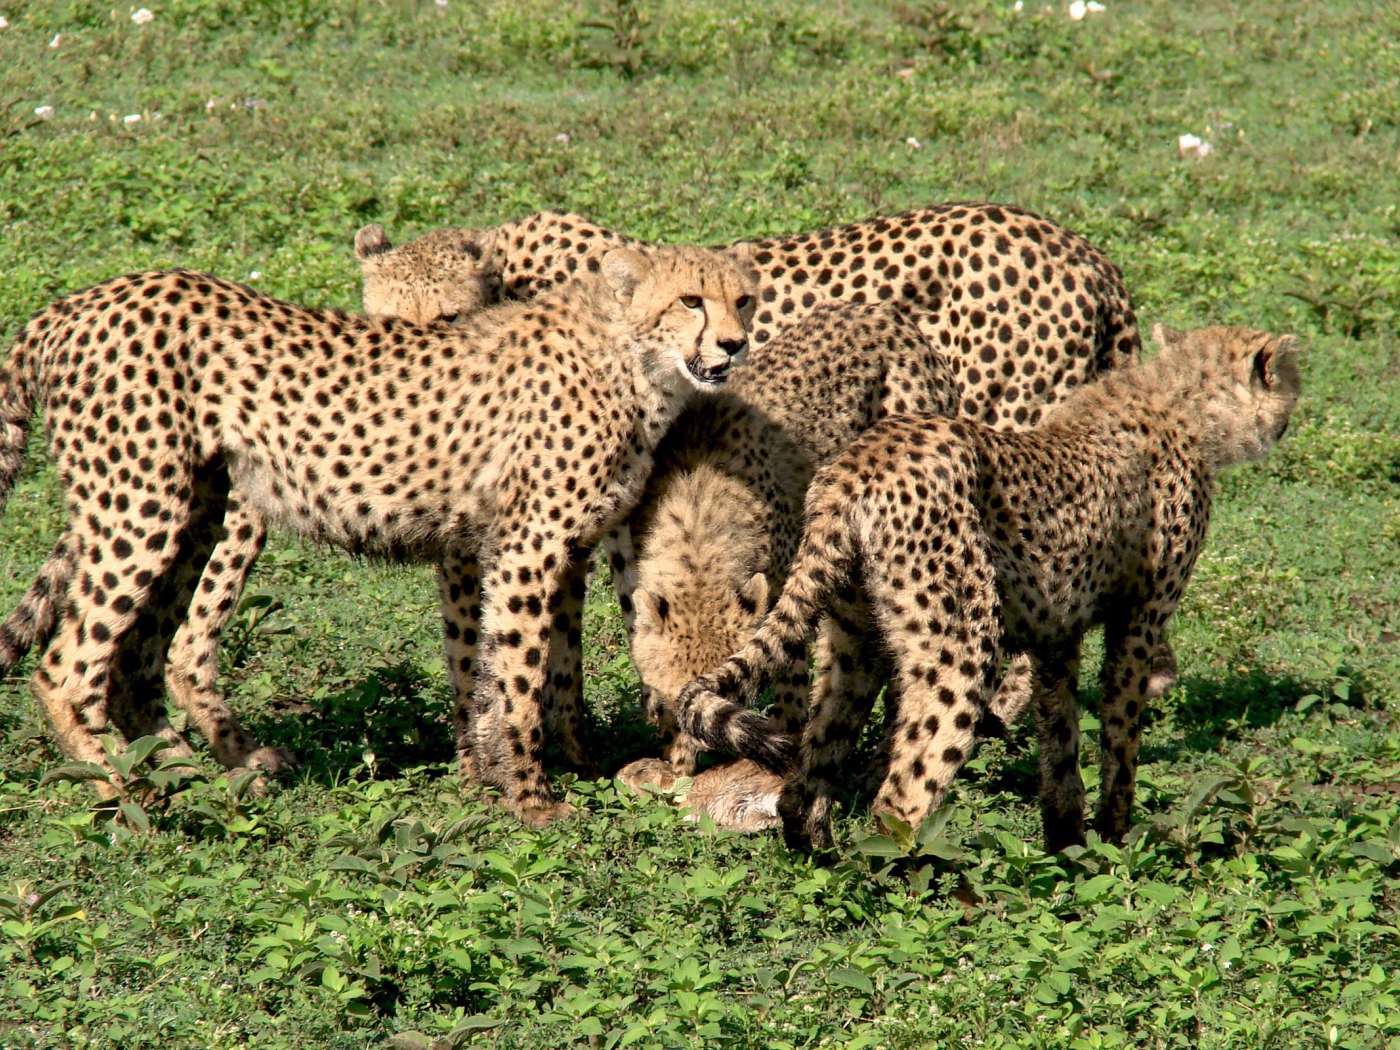 The family of cheetahs